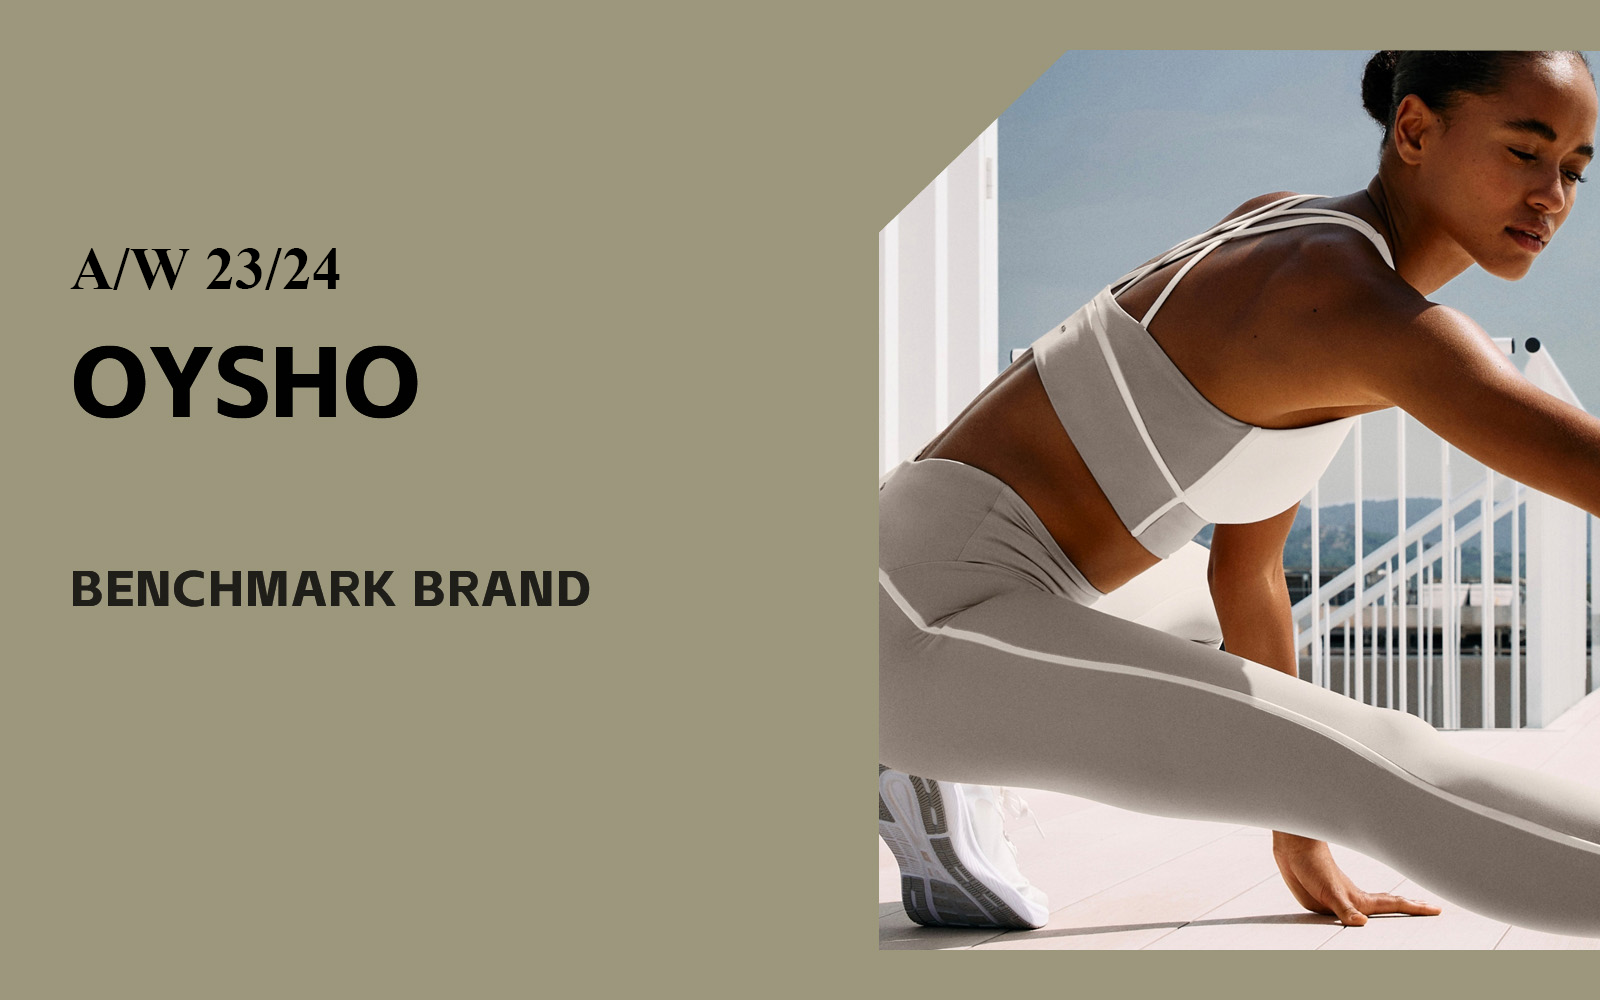 The Analysis of Oysho The Women's Benchmark Underwear & Loungewear Brand